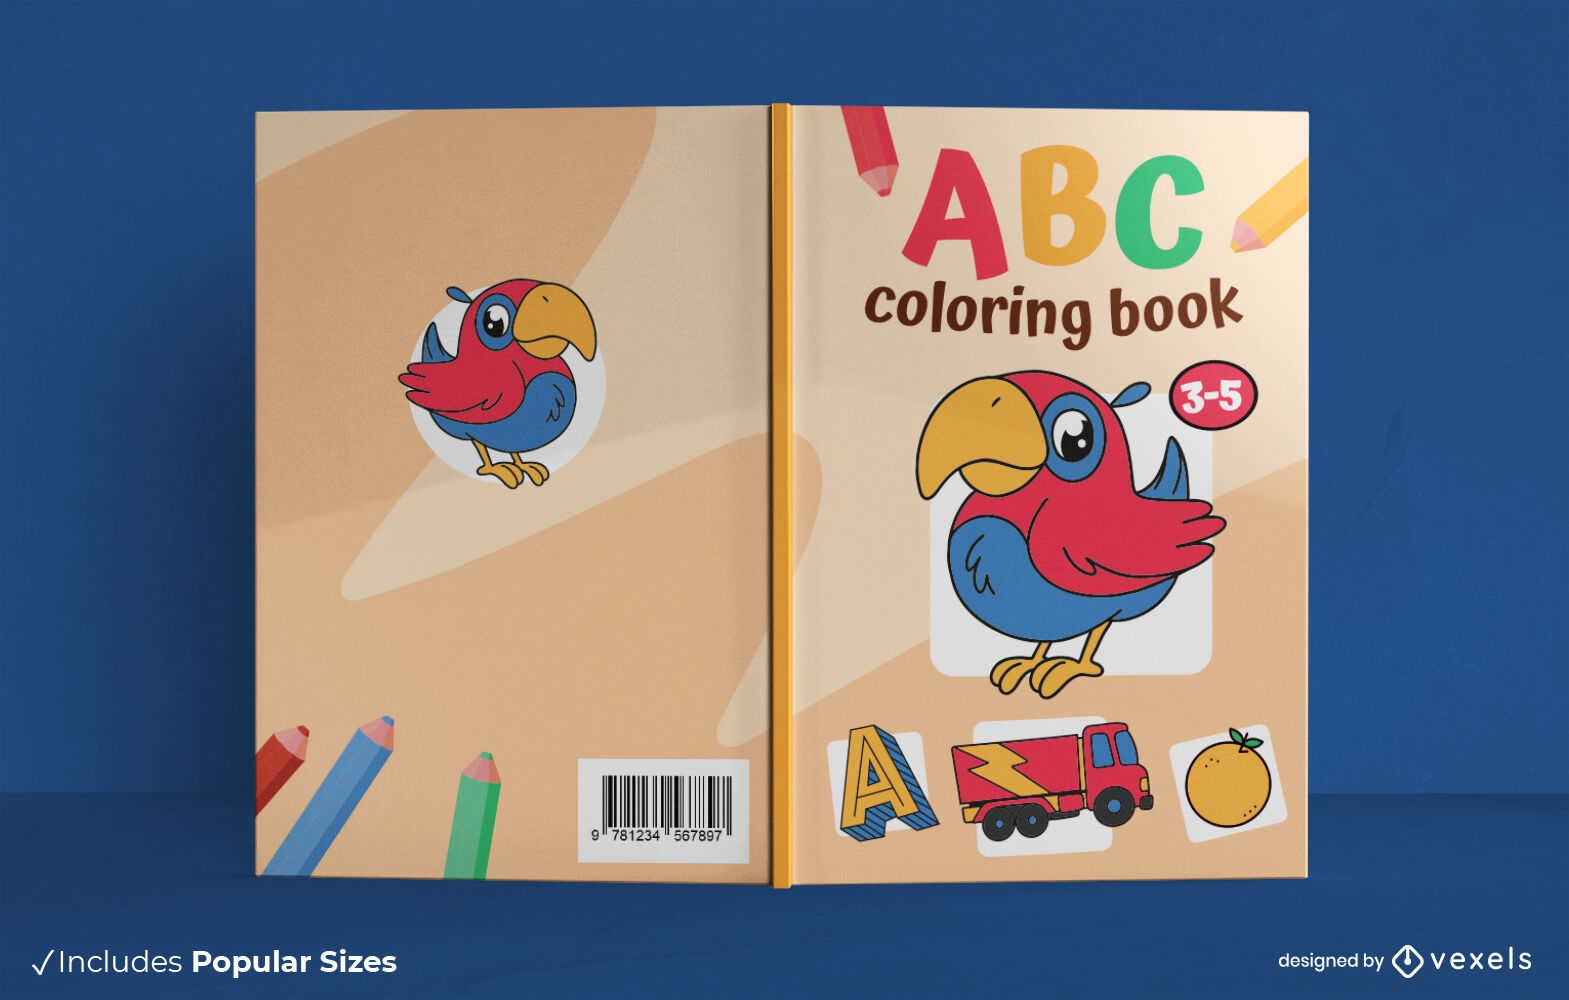 ABC coloring book cover design